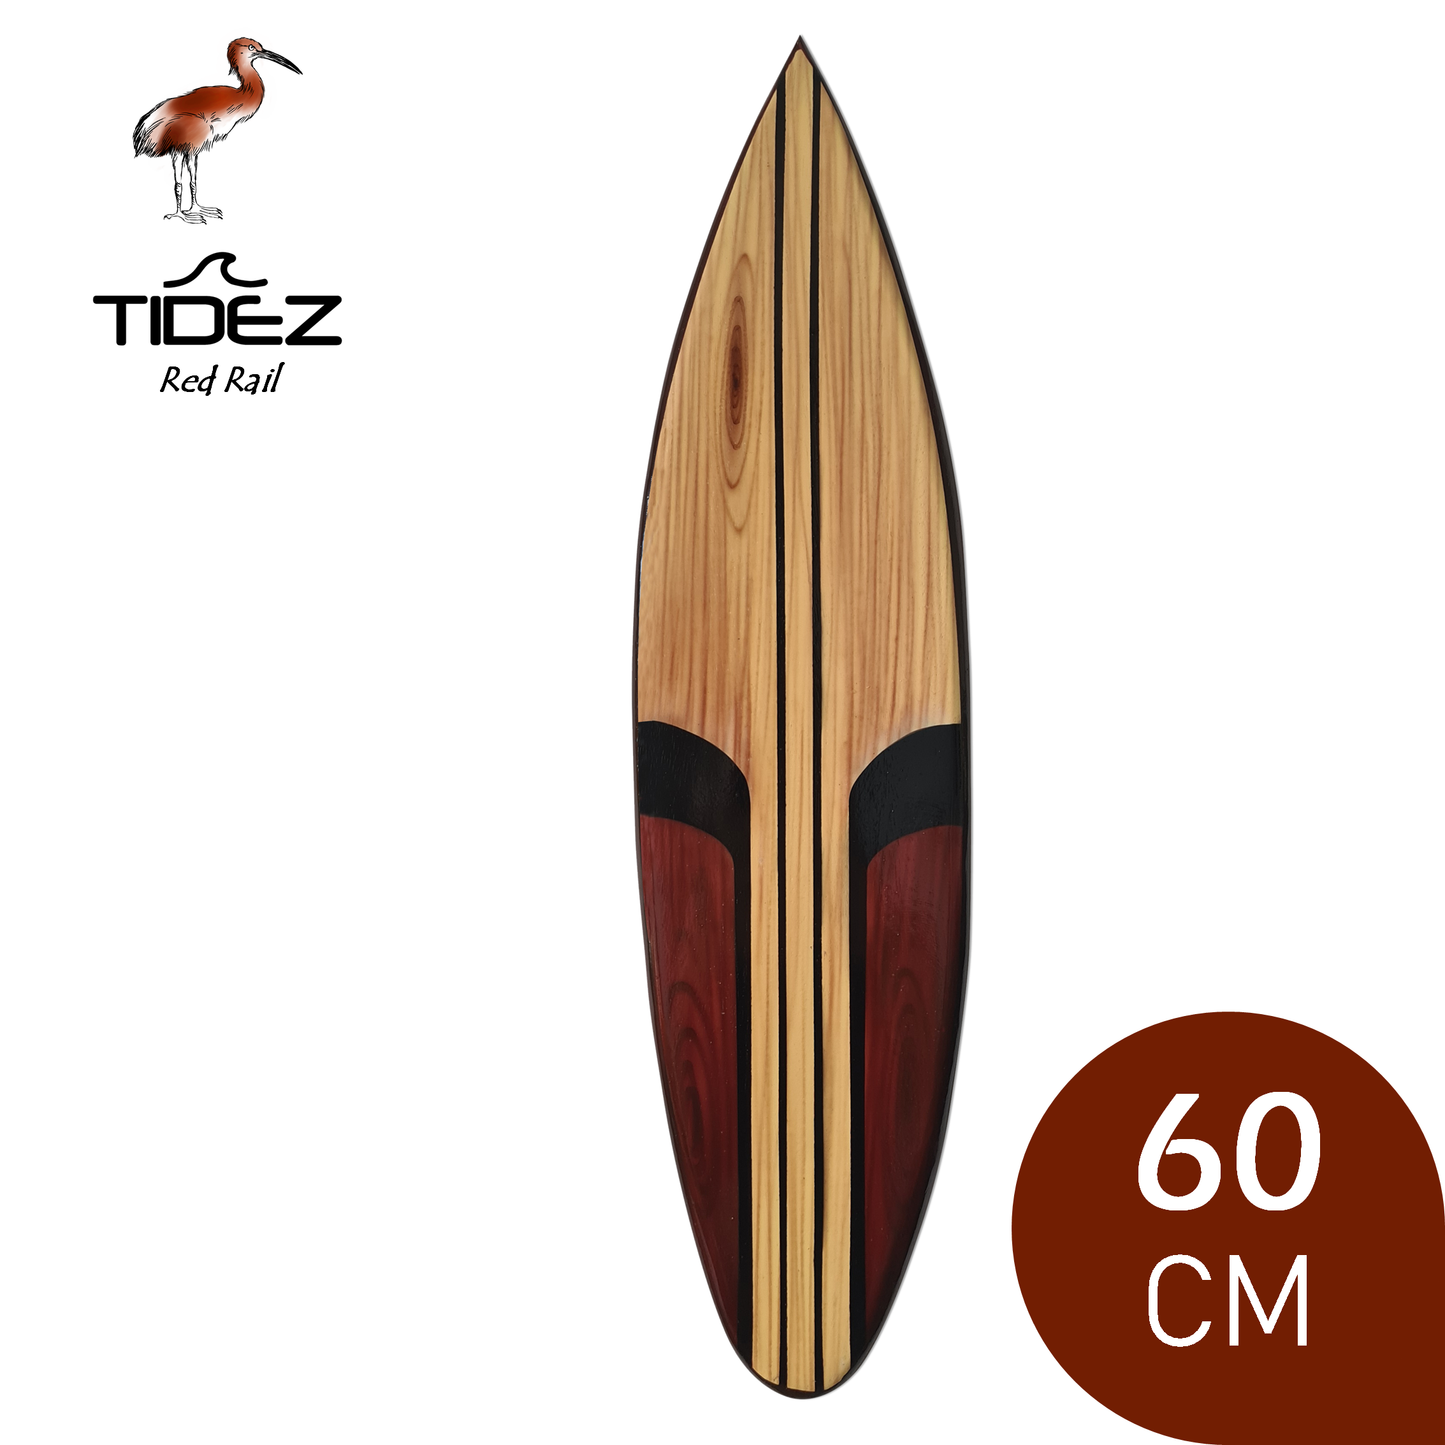 Tidez Red Rail 60cm